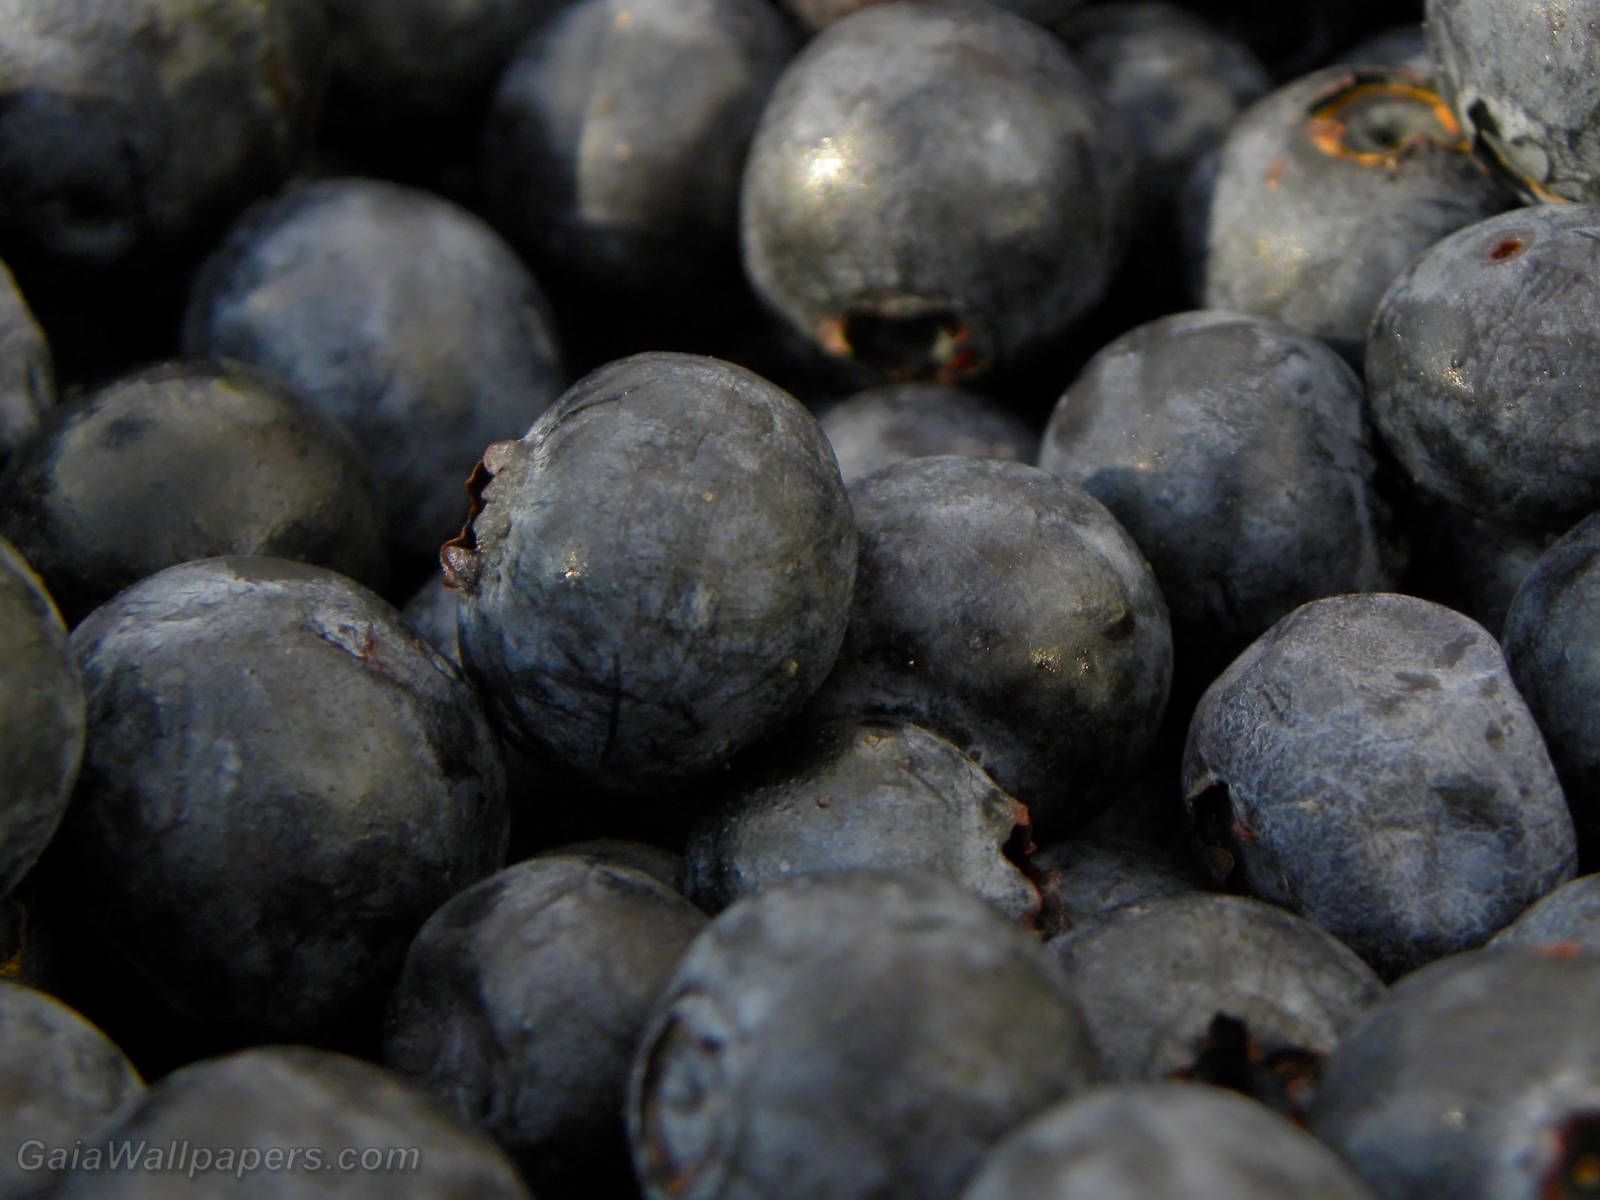 World of blueberries - Free desktop wallpapers